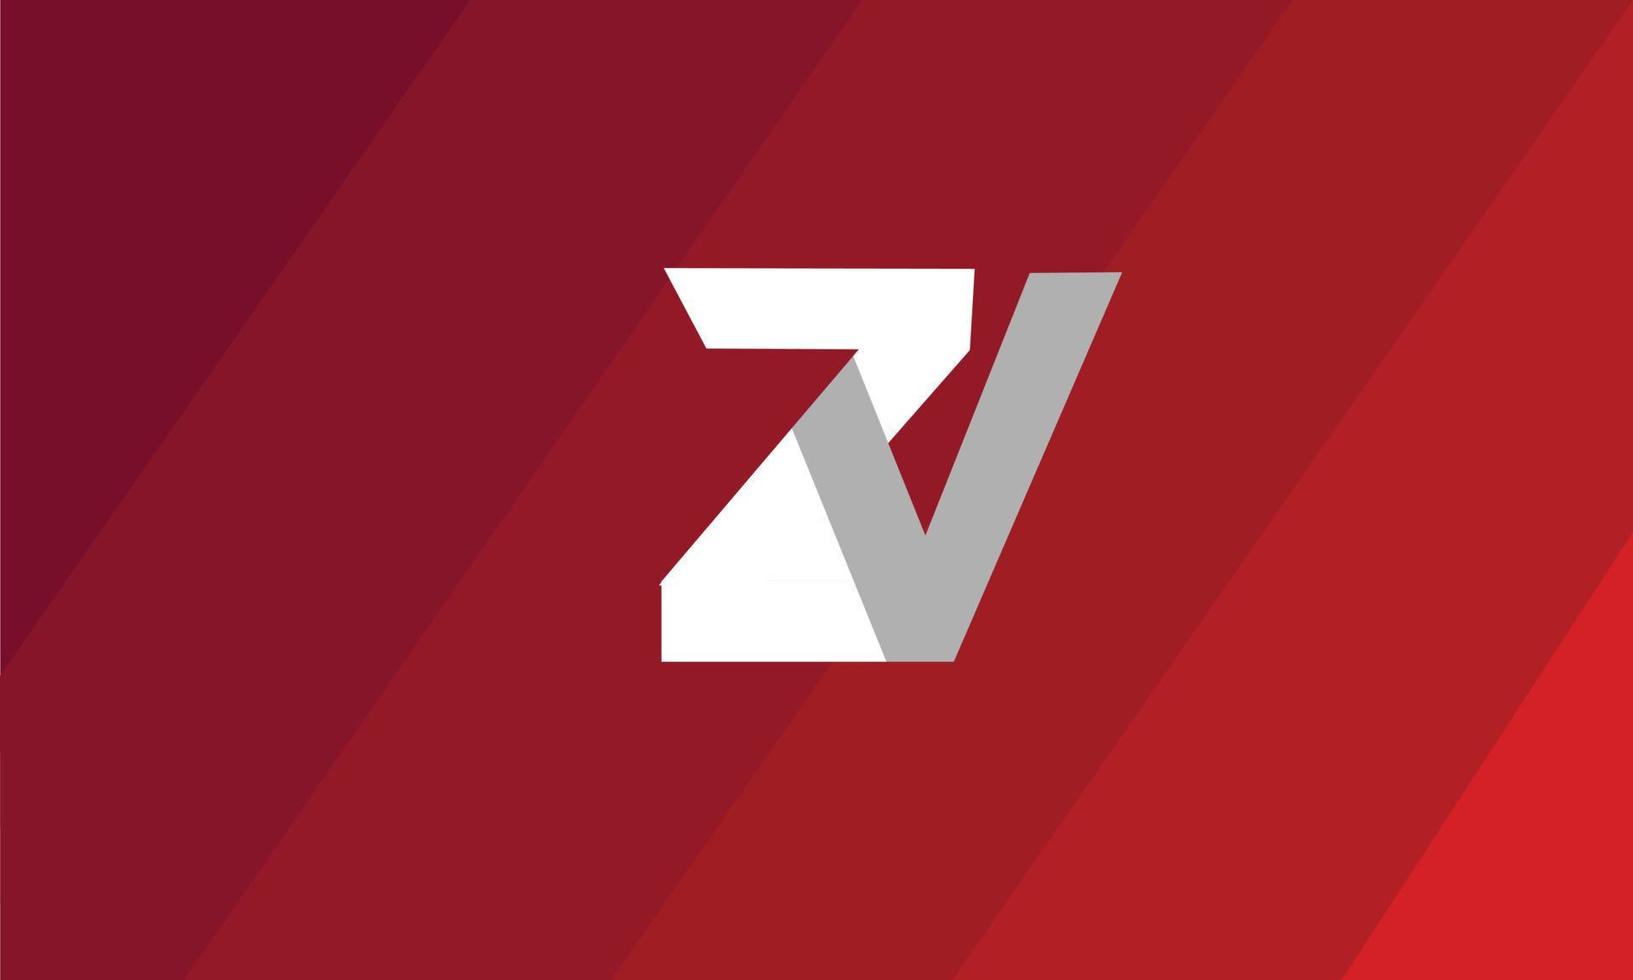 letras do alfabeto iniciais monograma logotipo zv, vz, z e v vetor